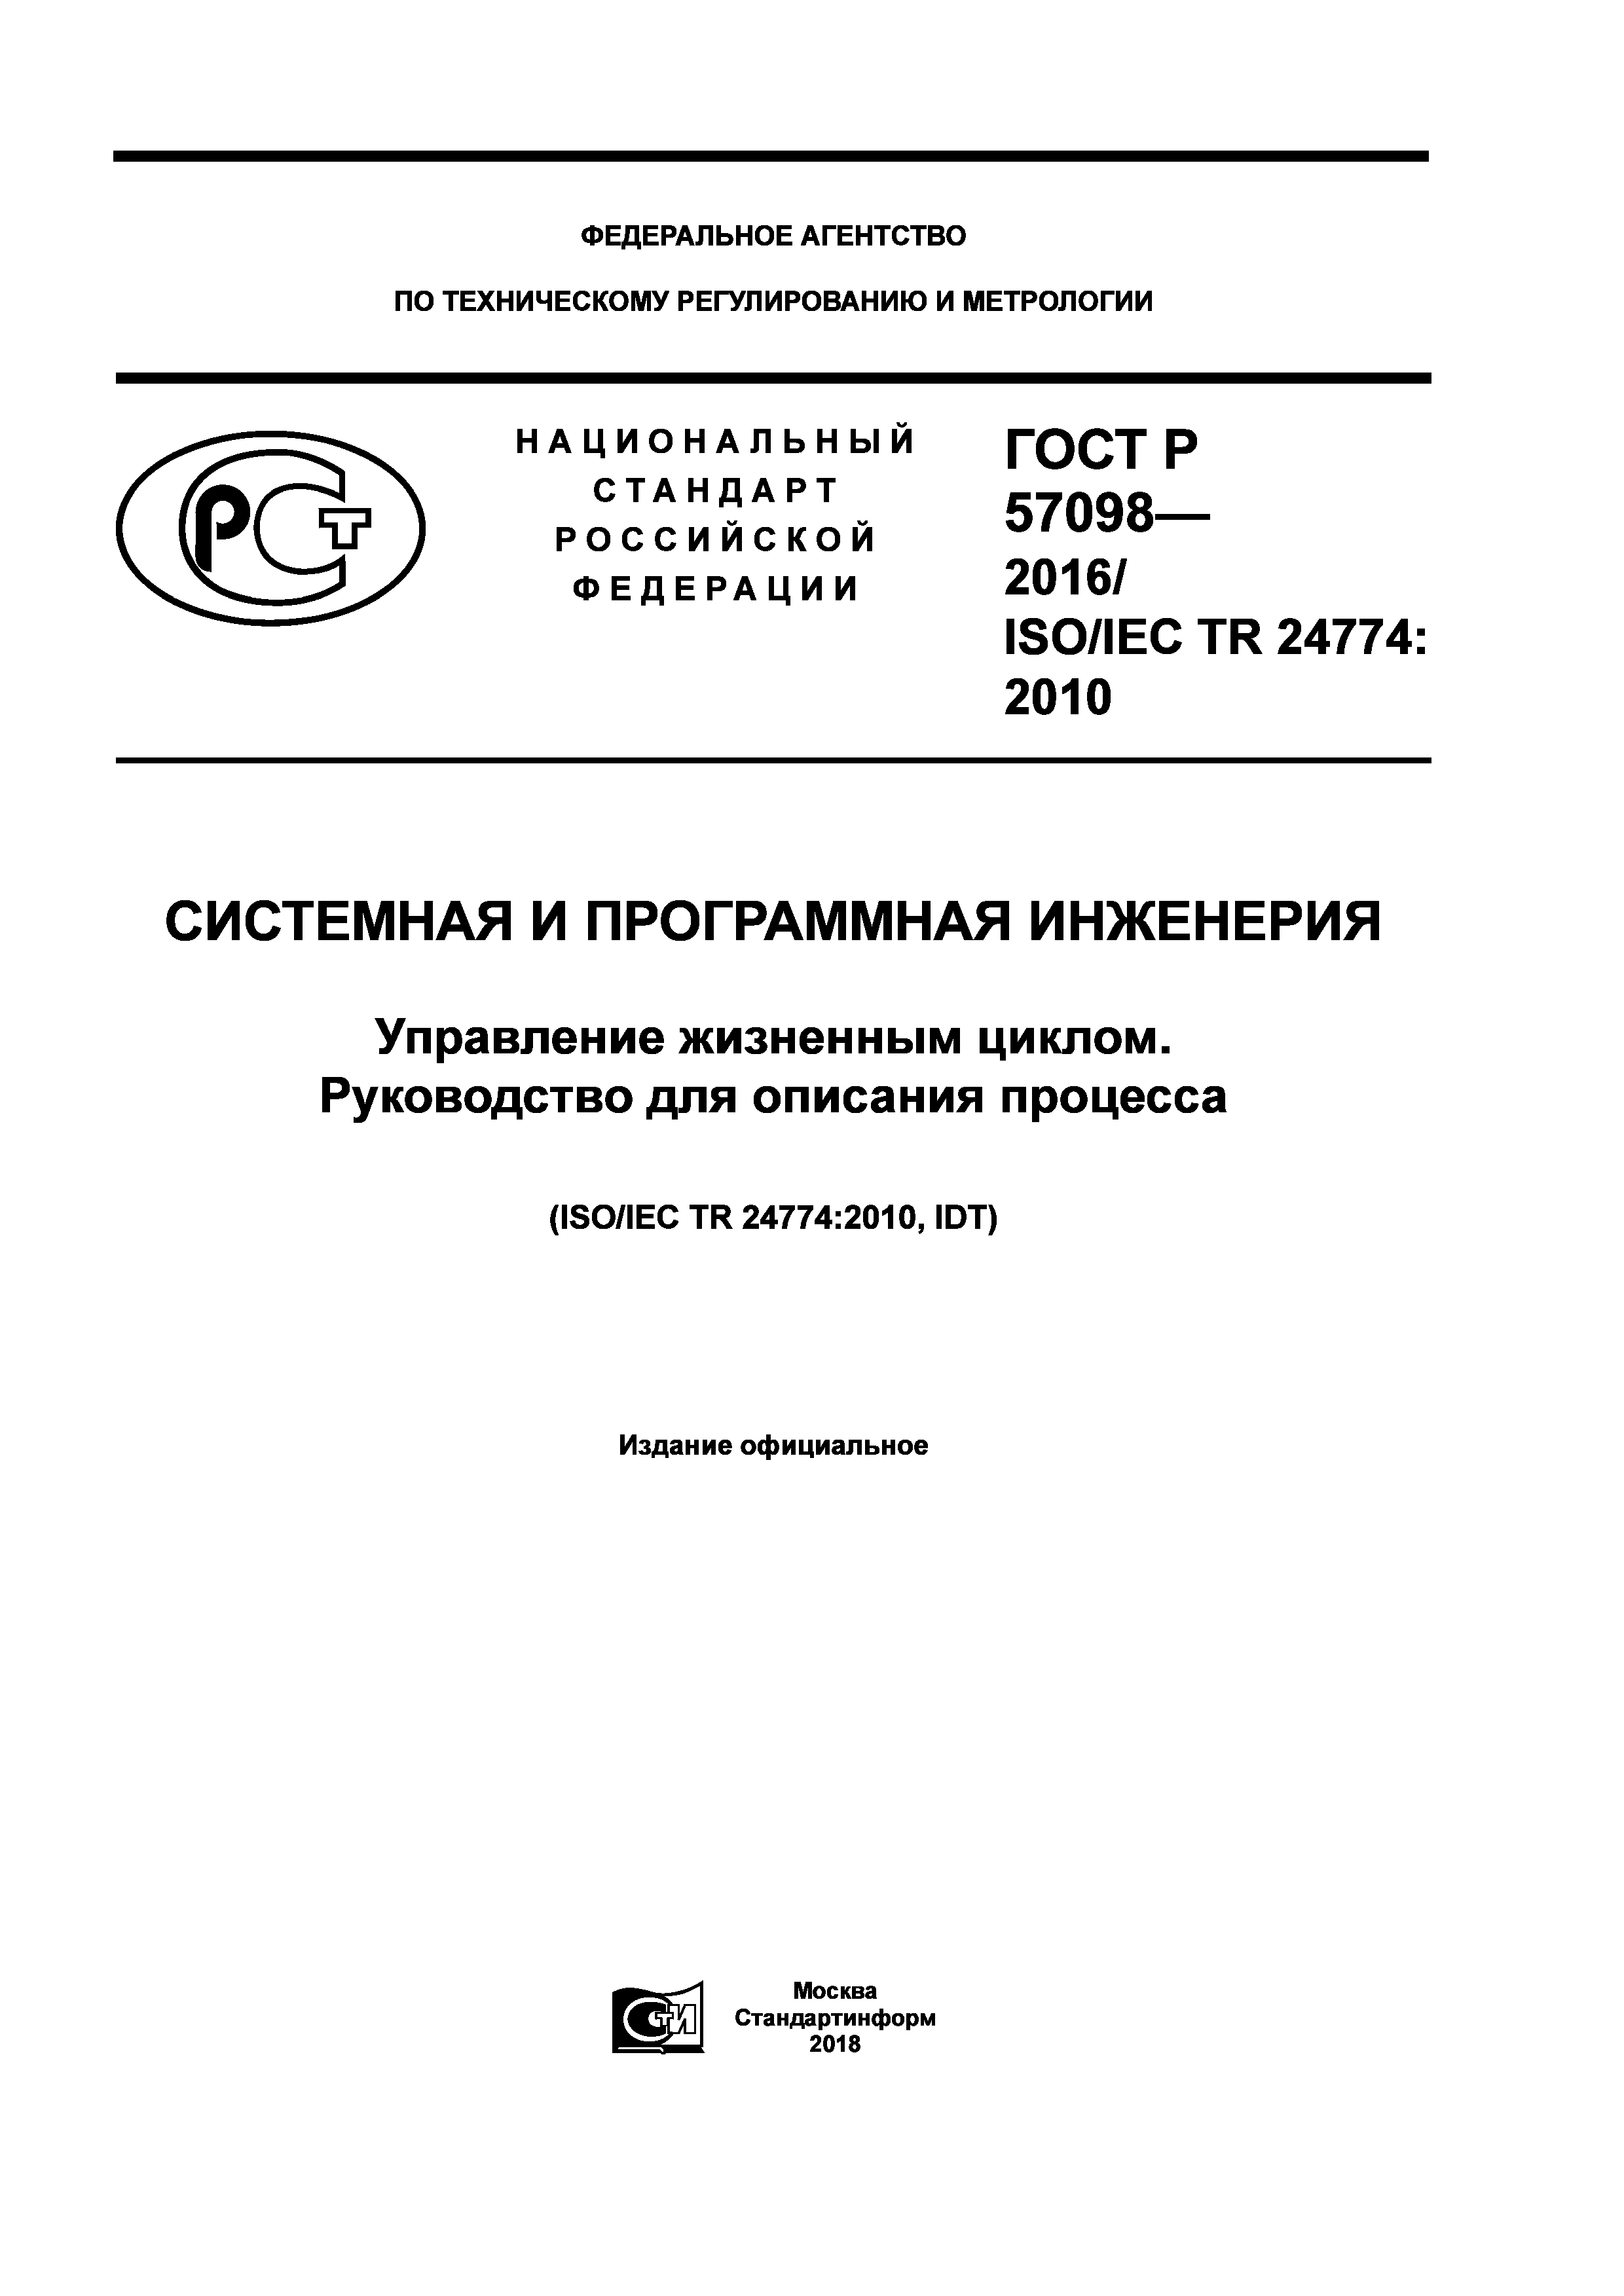 ГОСТ Р 57098-2016